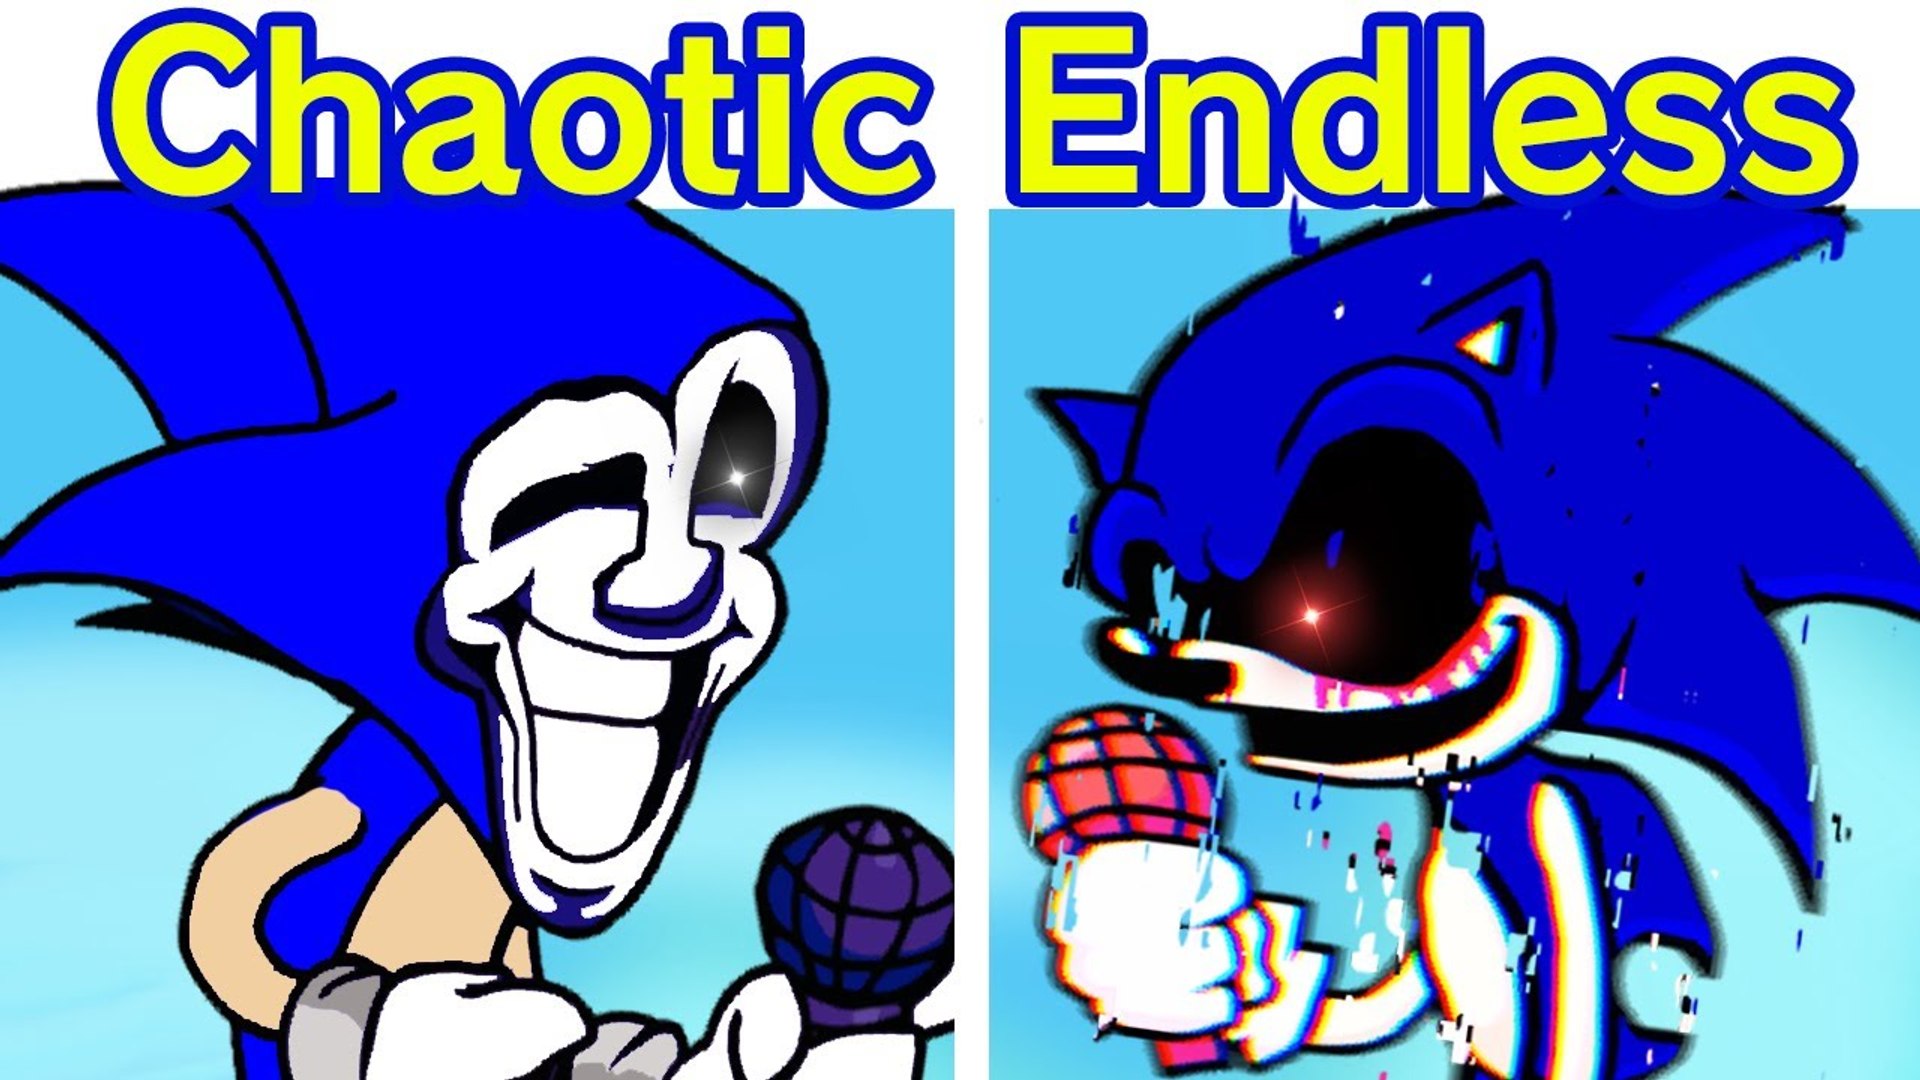 Corrupted Majin Sonic  Sonic, Character, Darth